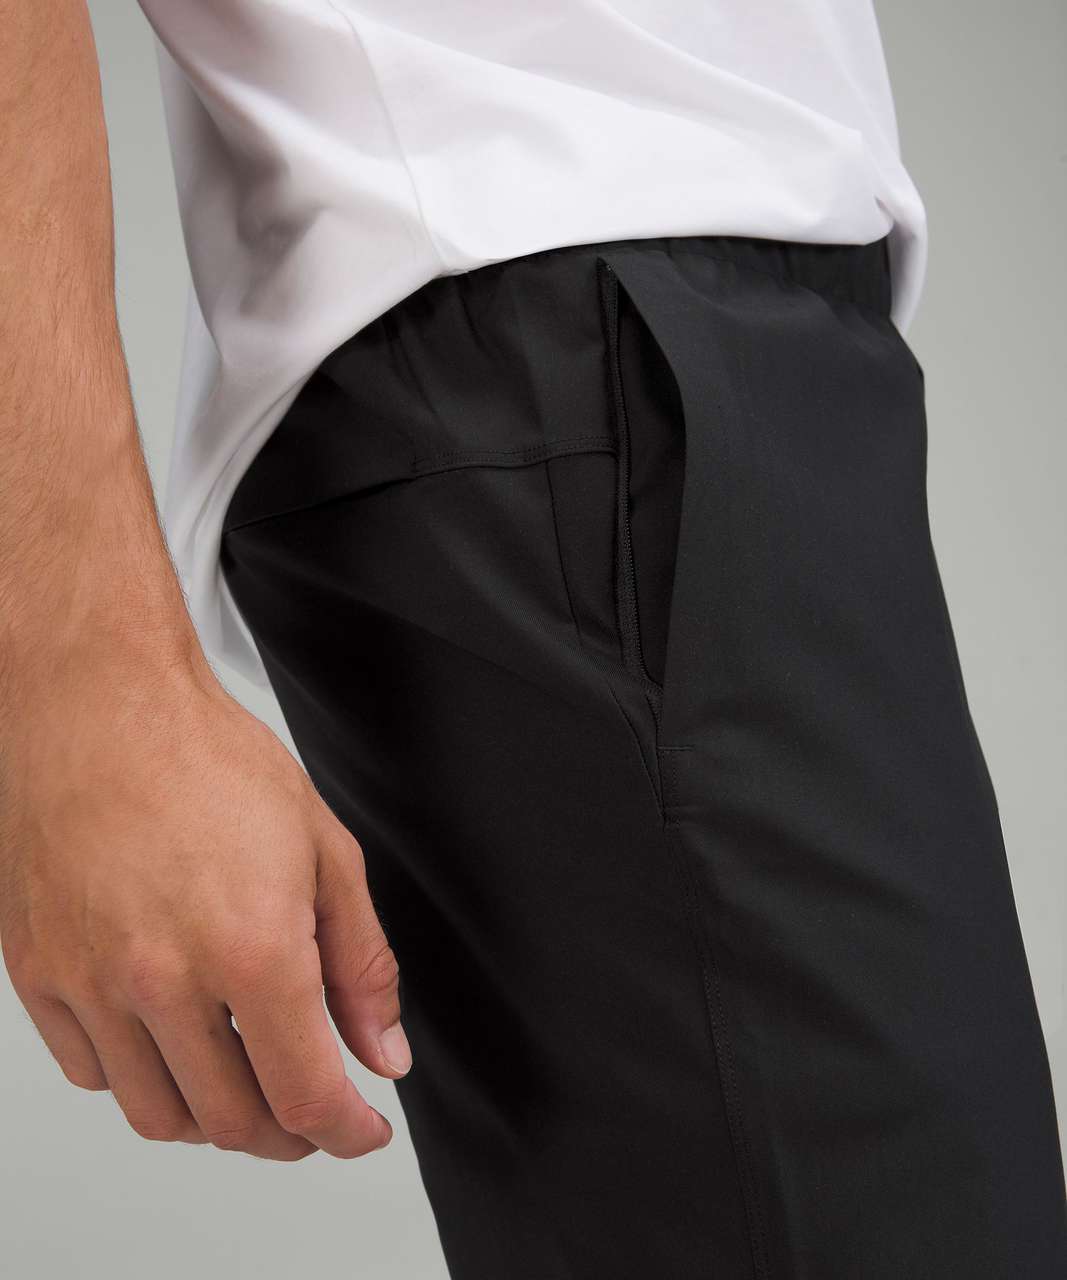 Lululemon New Venture Trouser *Twill Fabric - Black